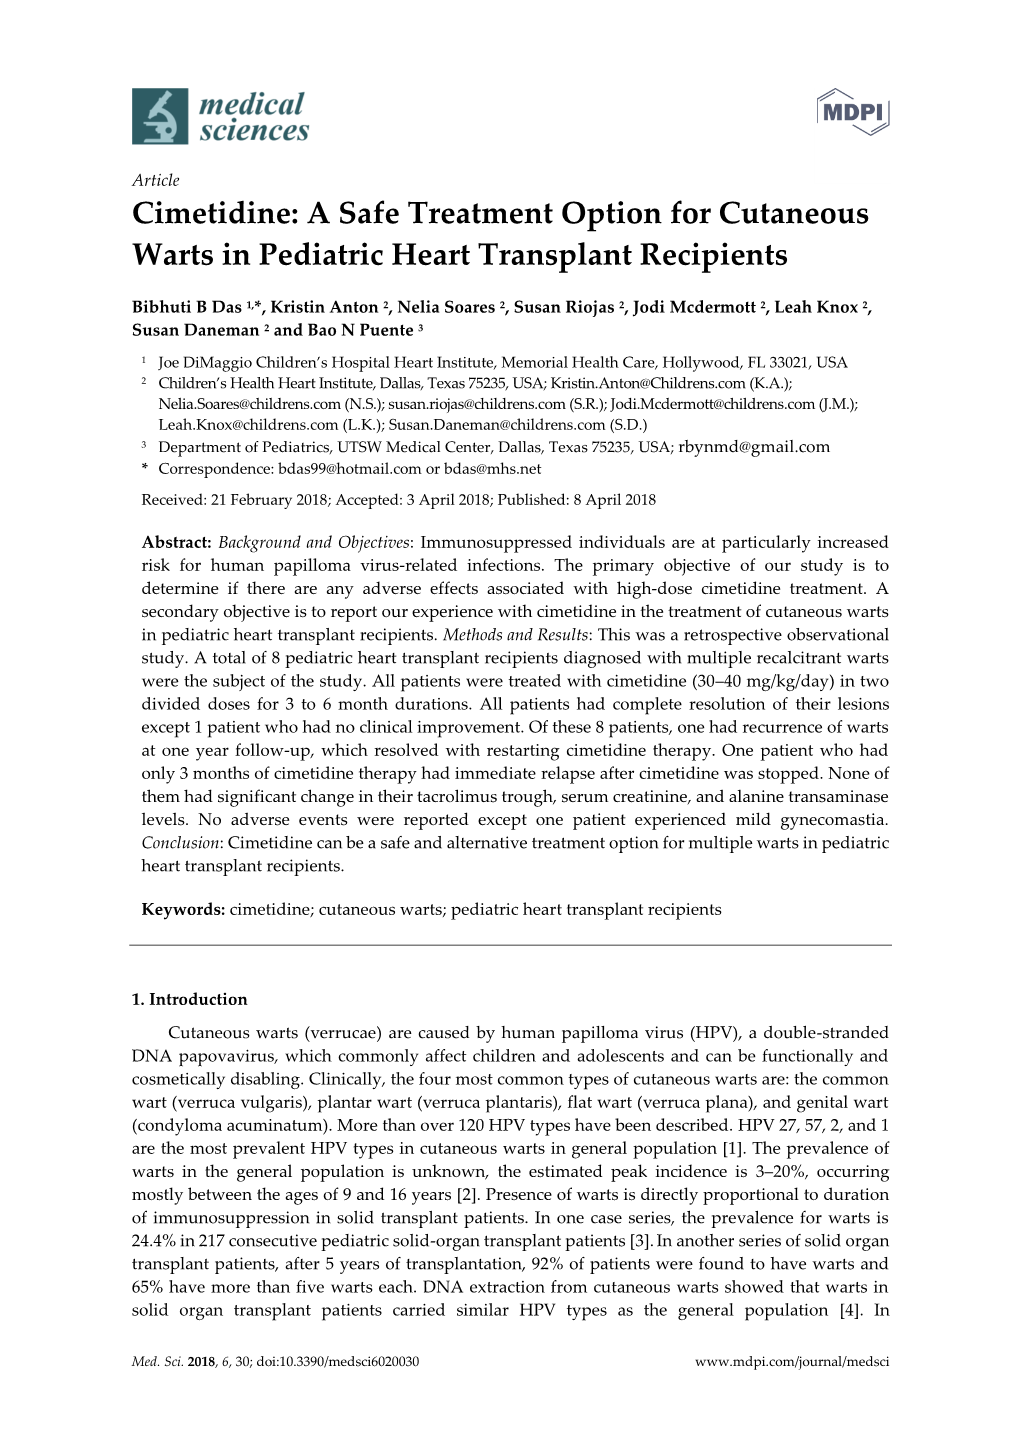 Cimetidine: a Safe Treatment Option for Cutaneous Warts in Pediatric Heart Transplant Recipients